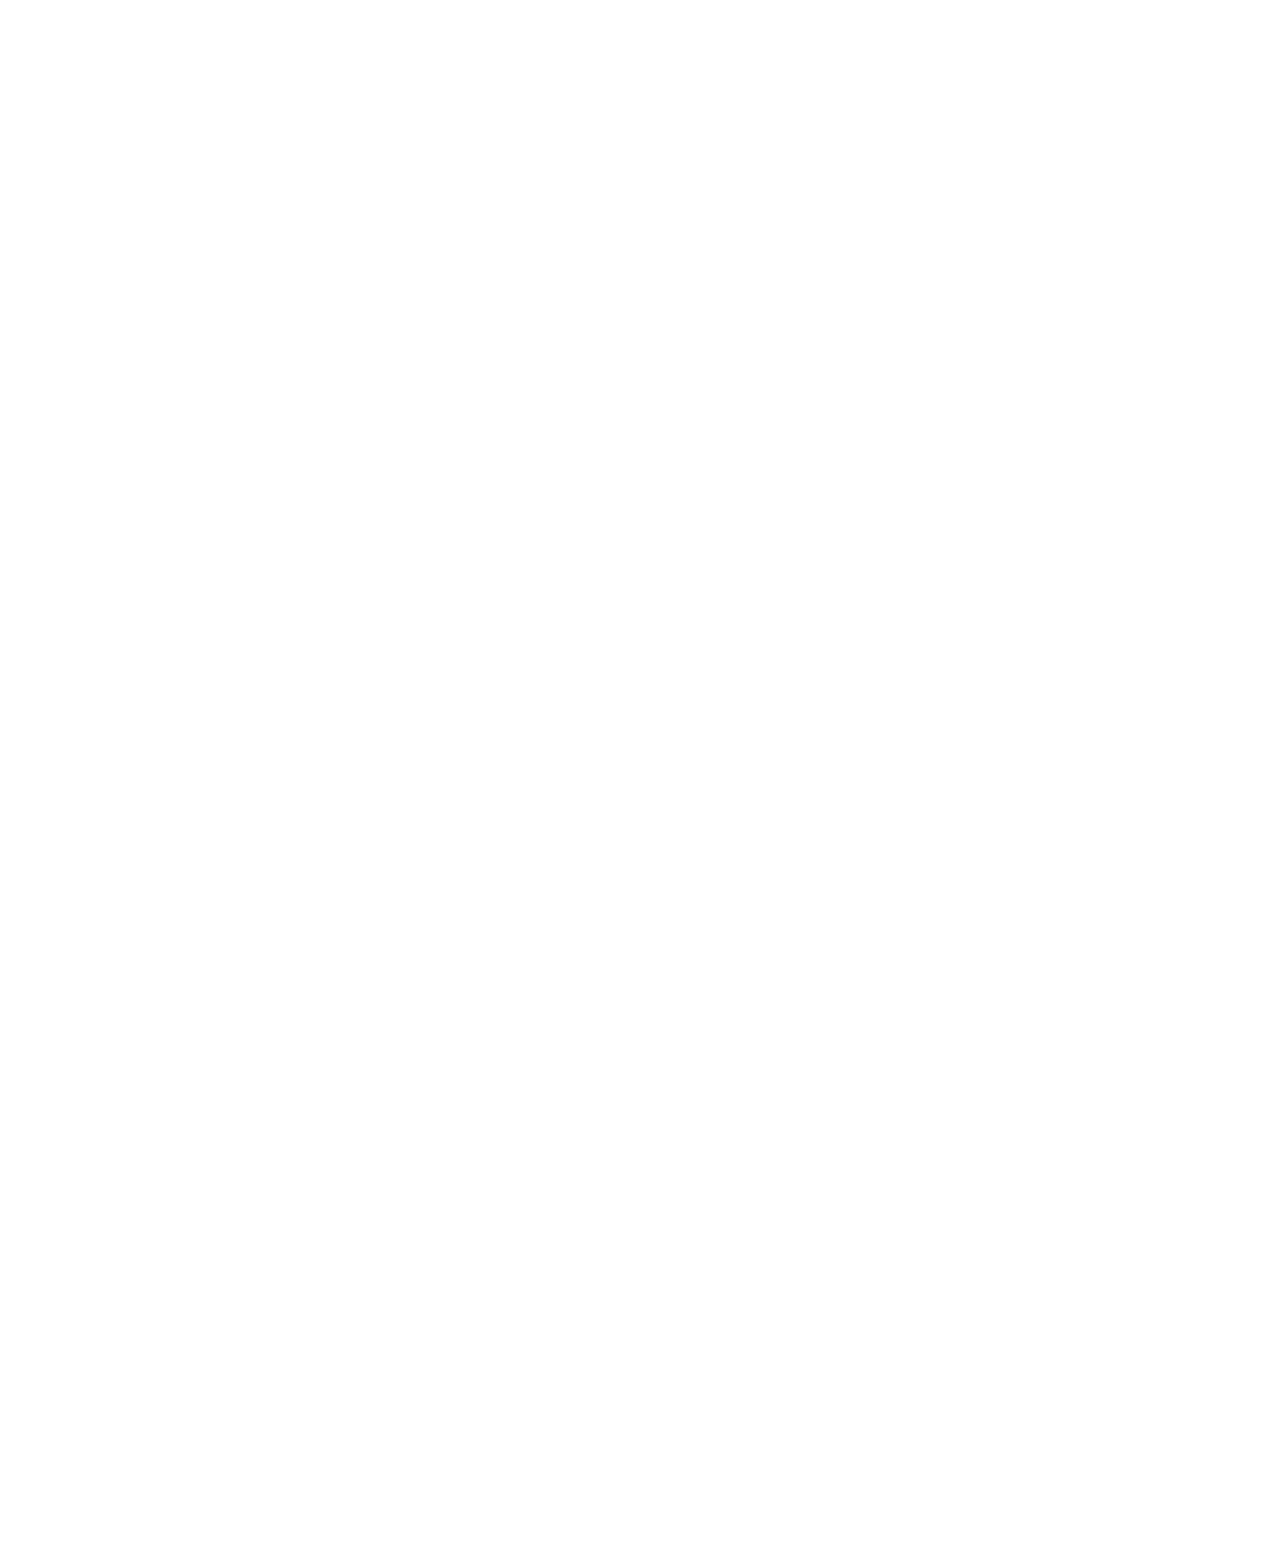 enCore Energy logo for dark backgrounds (transparent PNG)